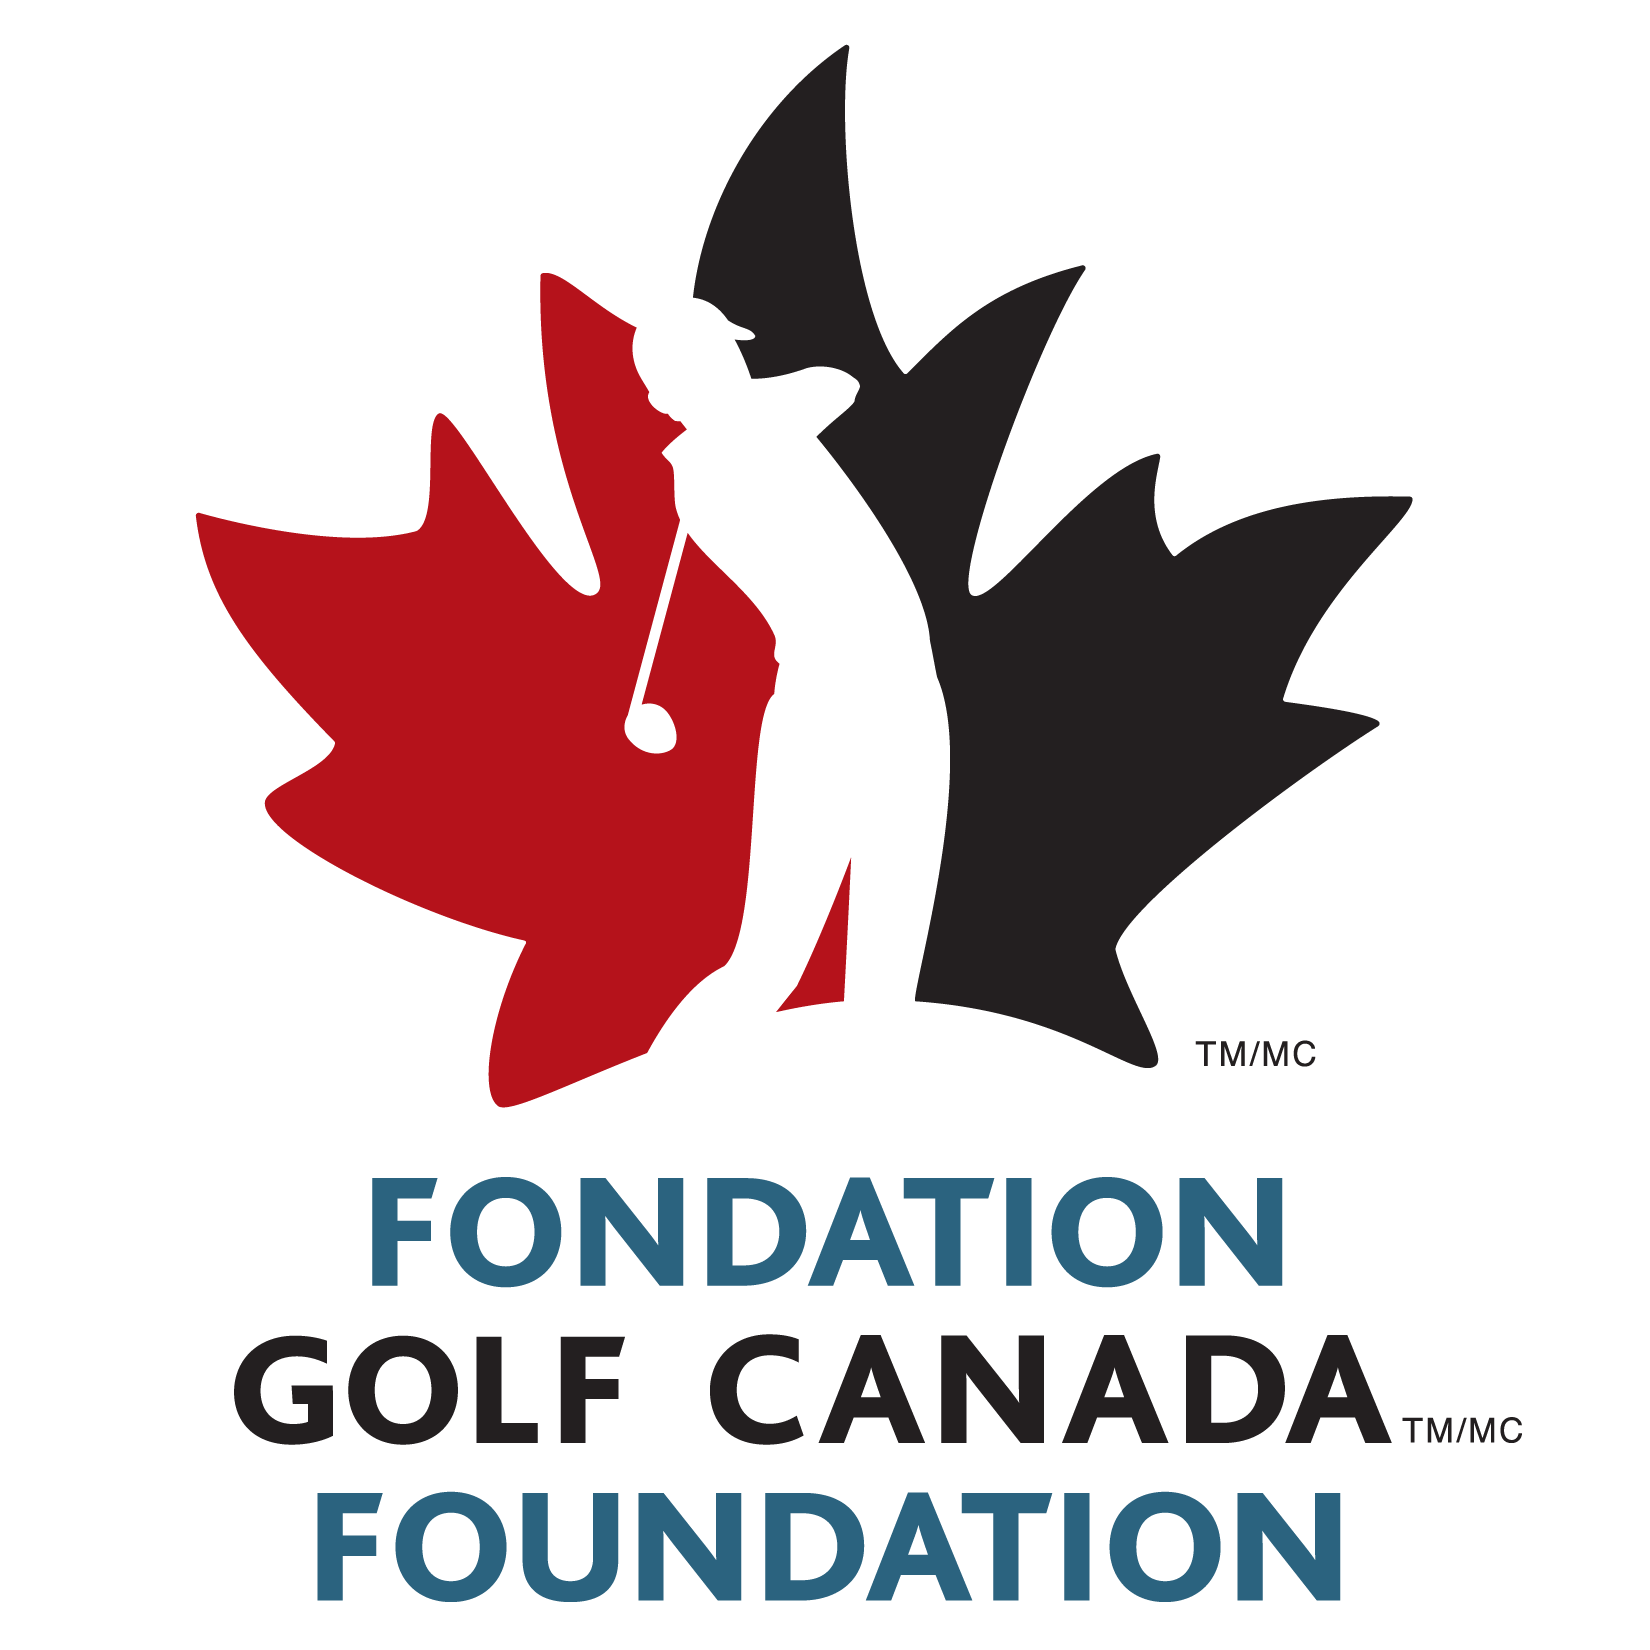 Golf Canada Foundation Trustee Portal